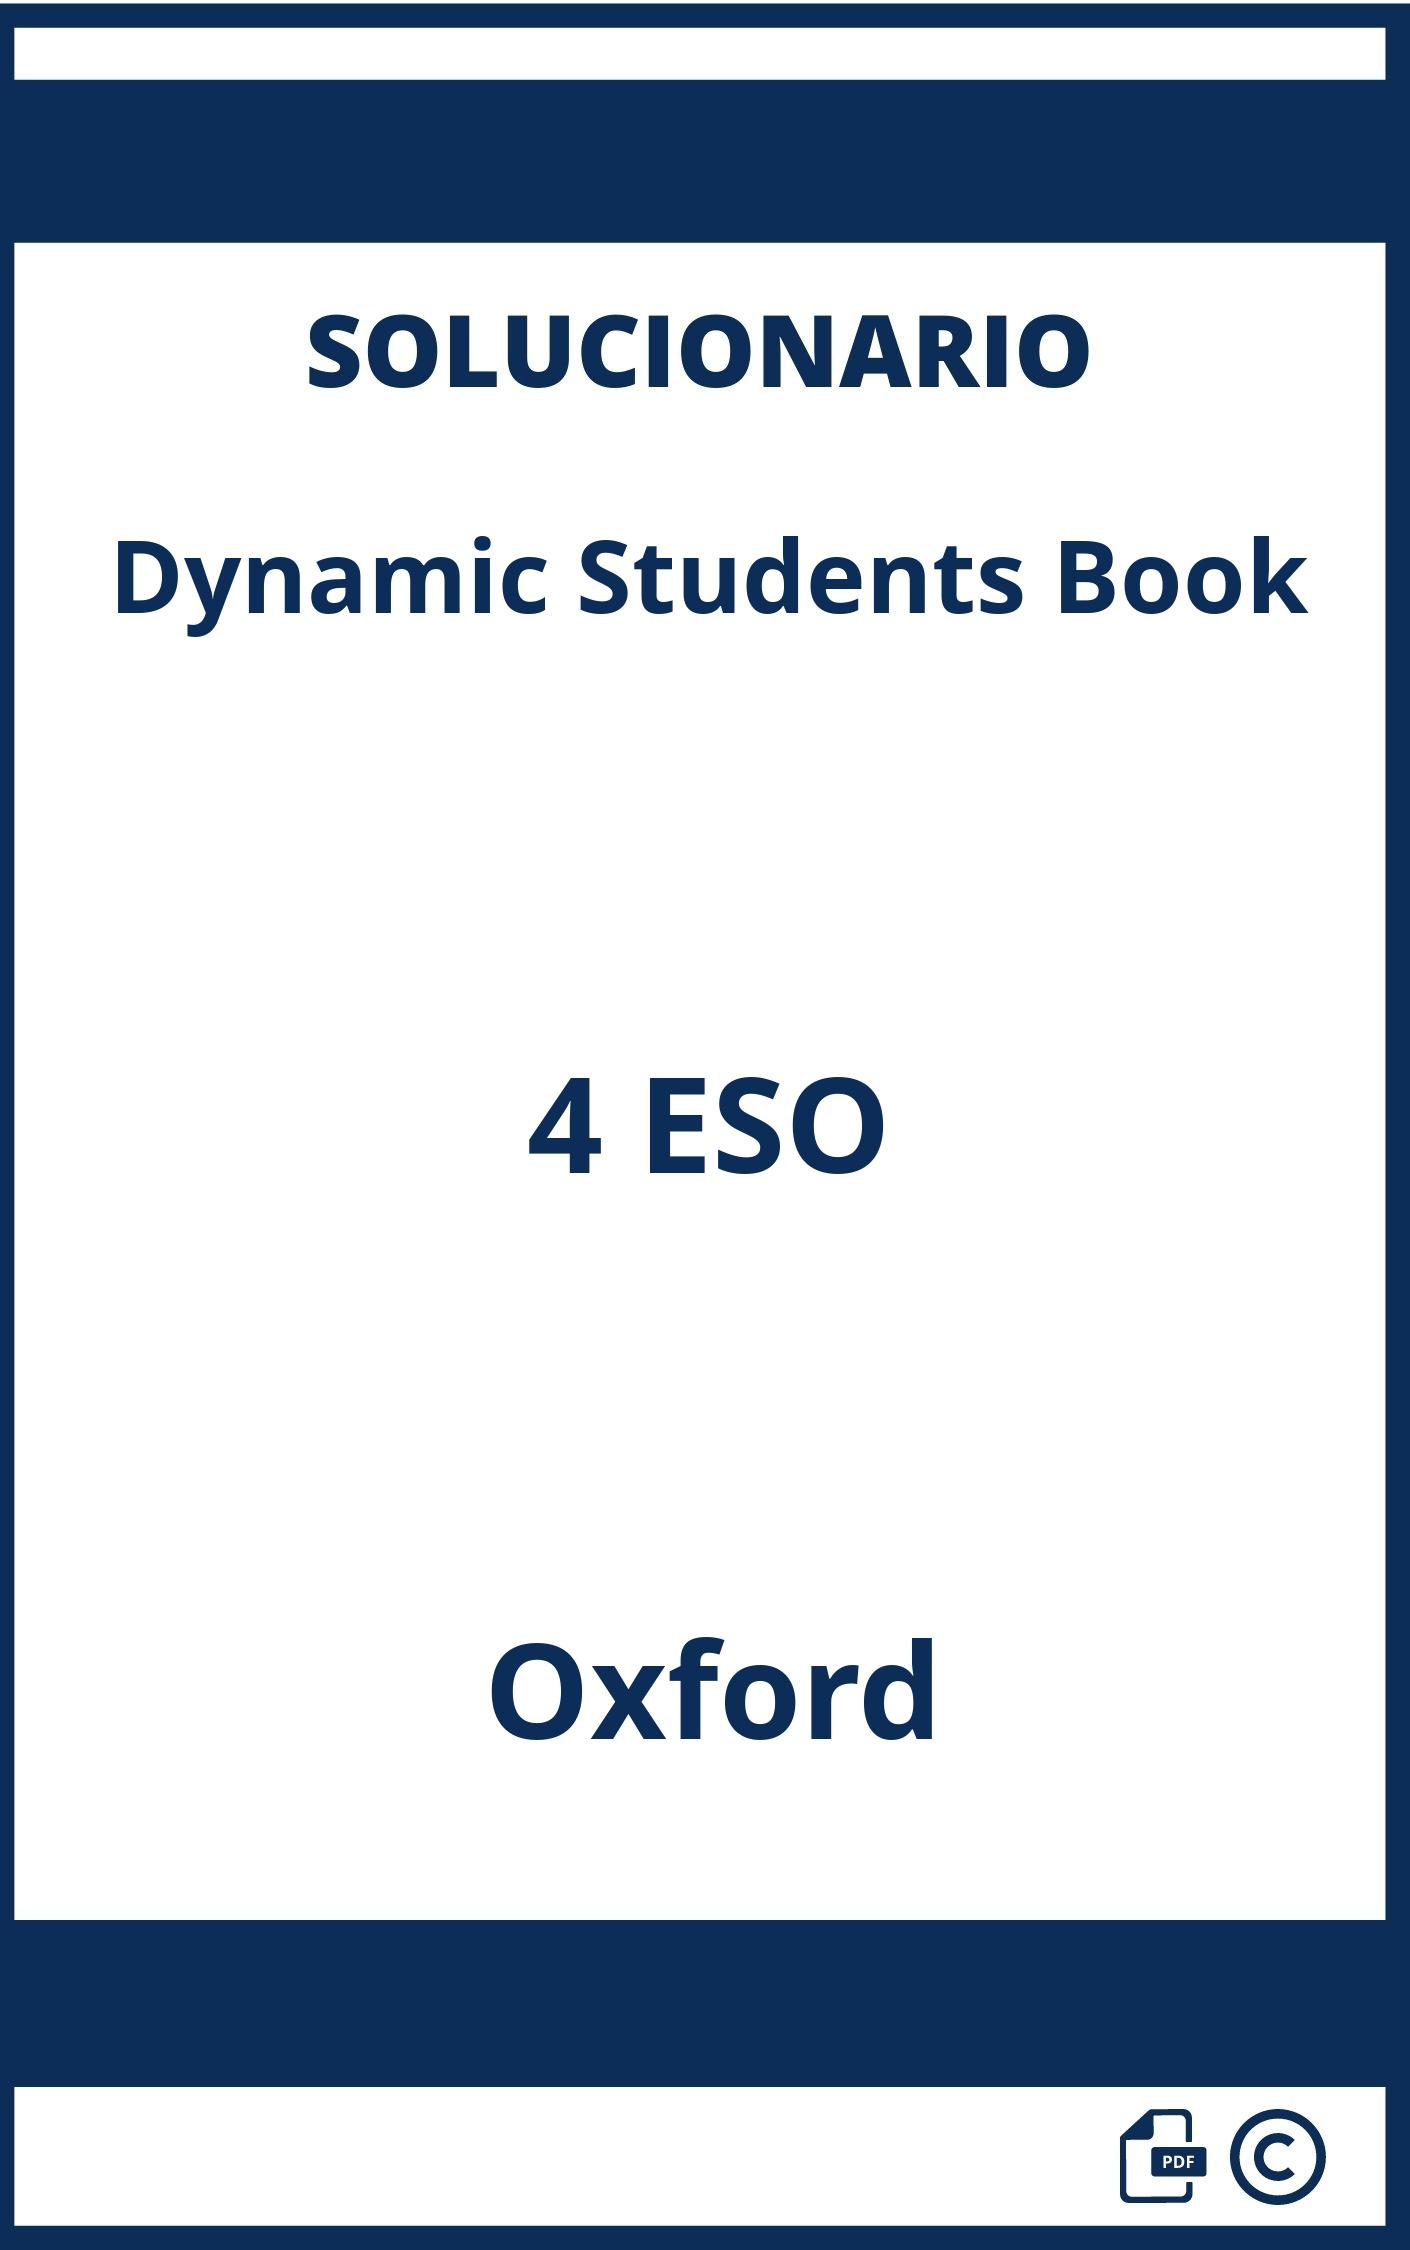 Solucionario Dynamic Students Book 4 ESO Oxford